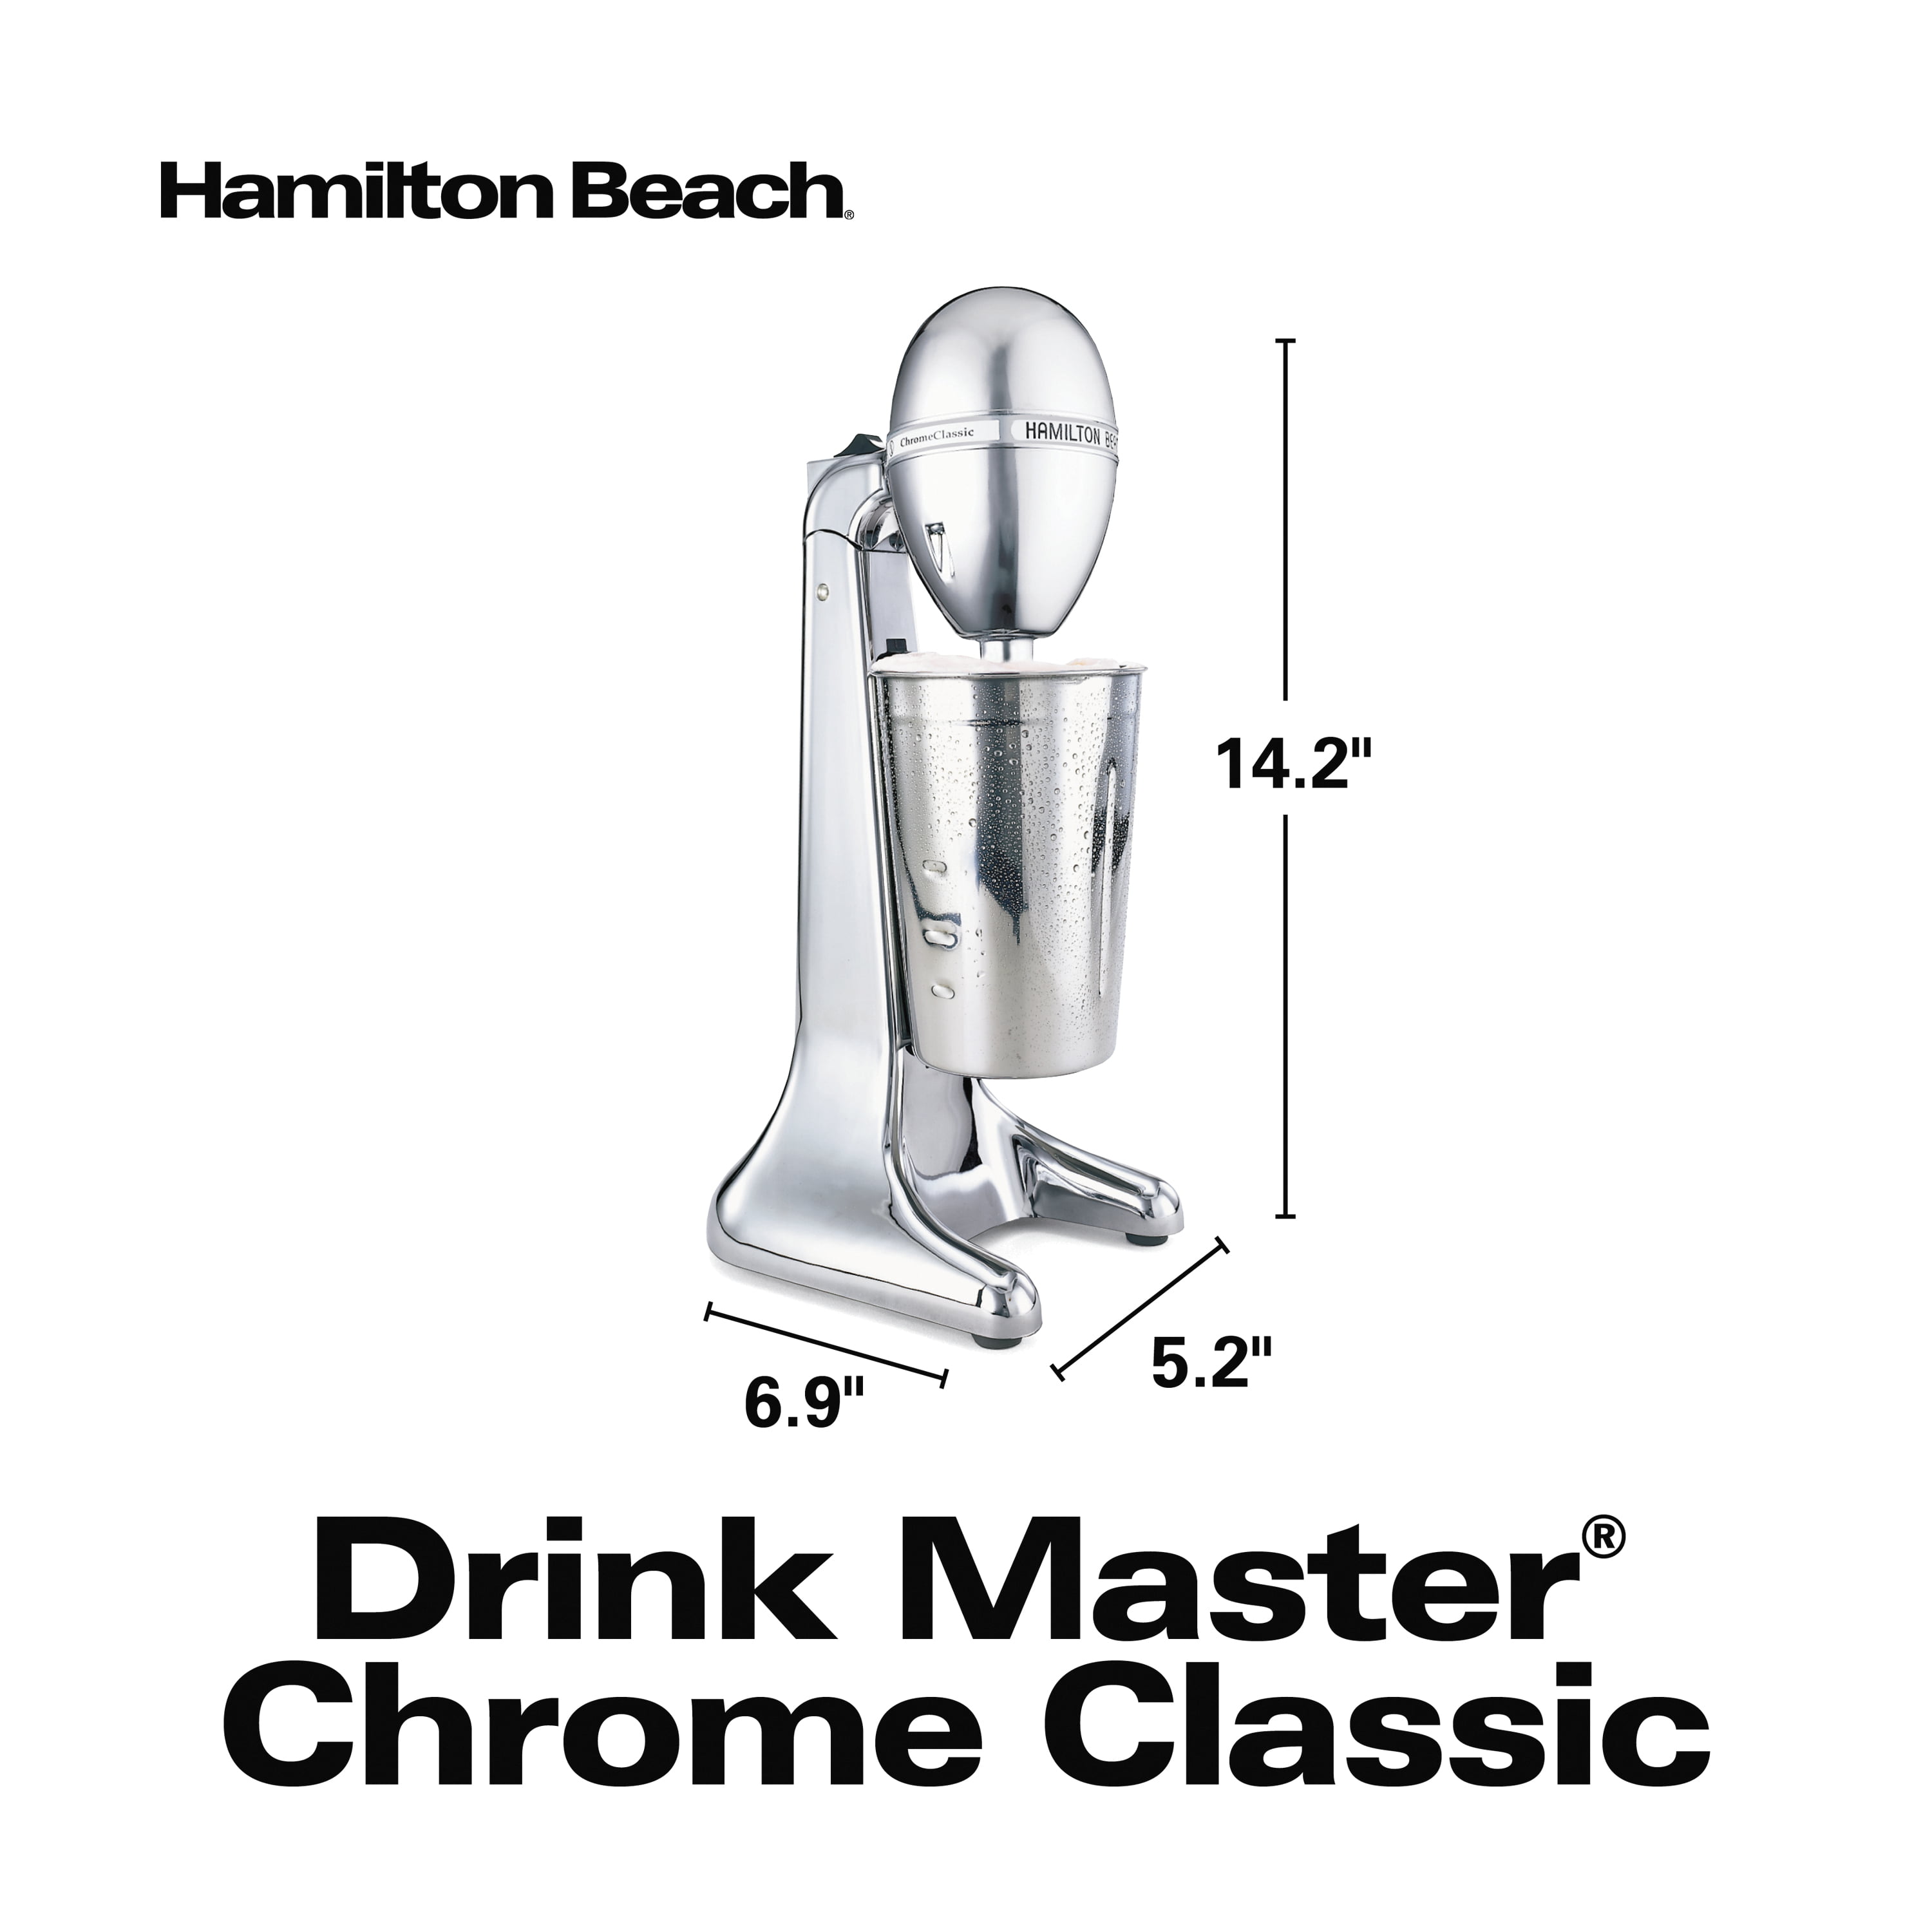 Hamilton Beach Commercial Drink Mixer / Milkshake Maker - 3 Speeds